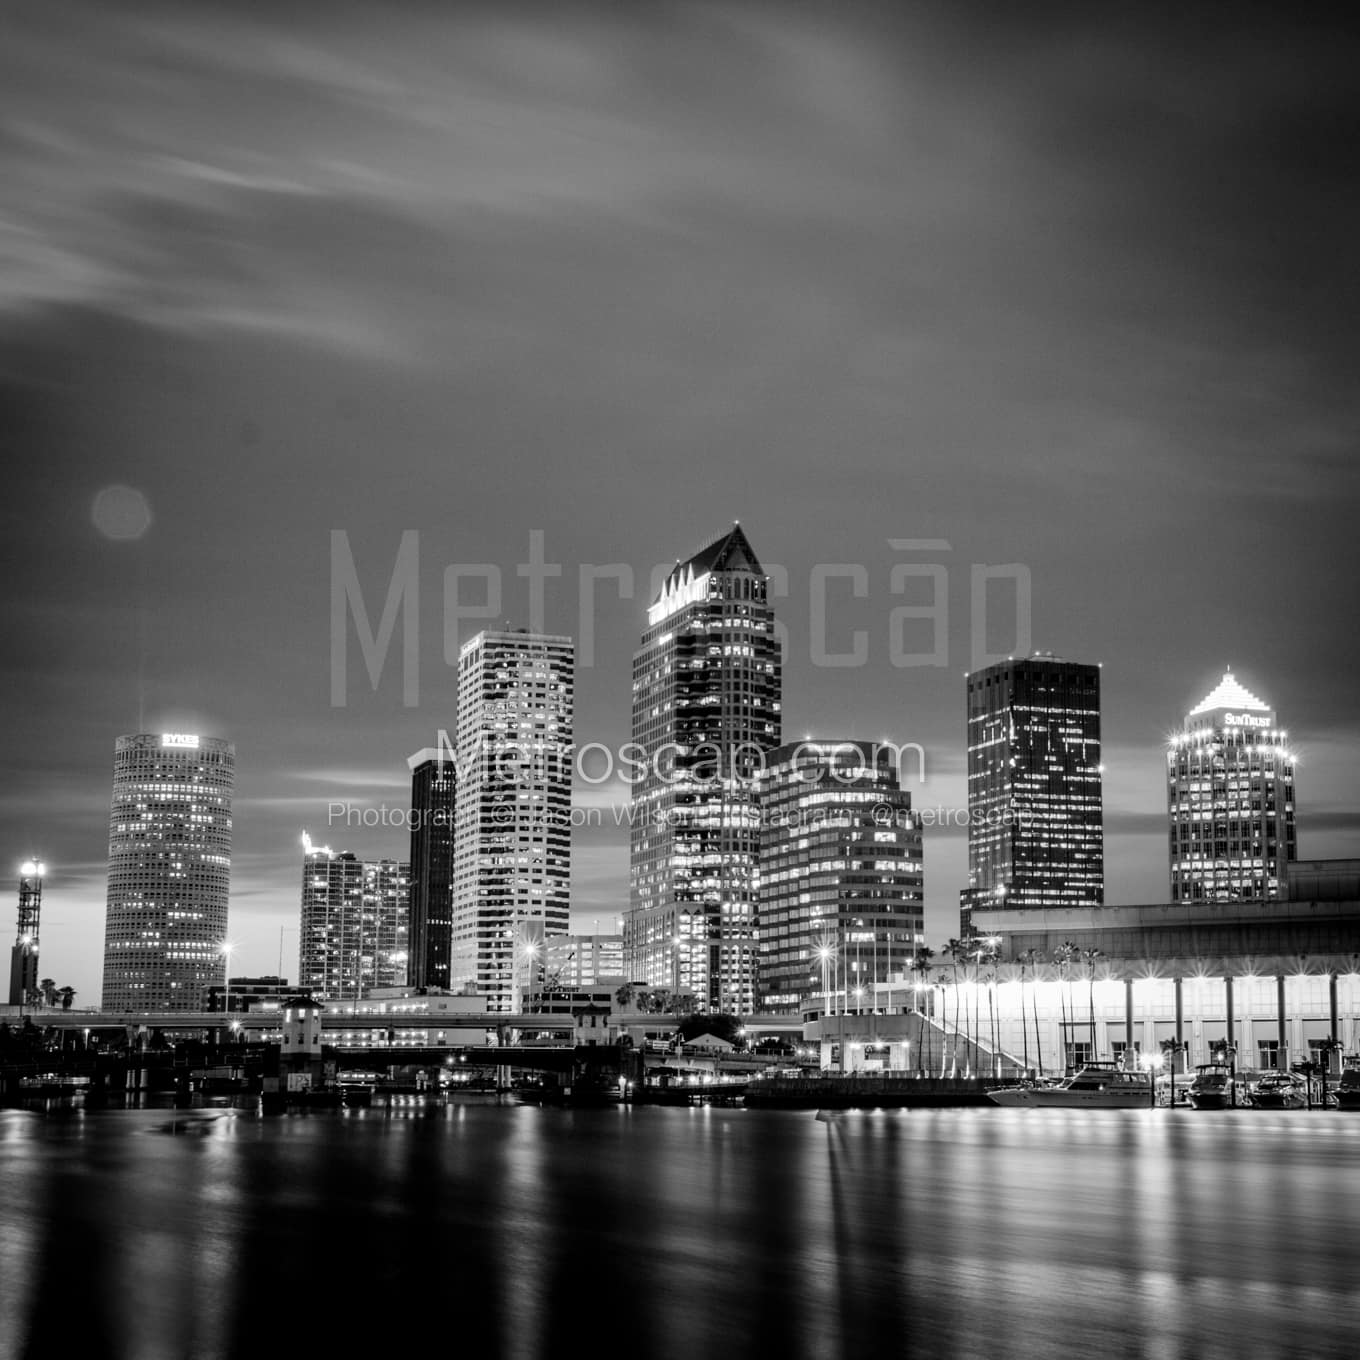 Tampa Black & White Landscape Photography